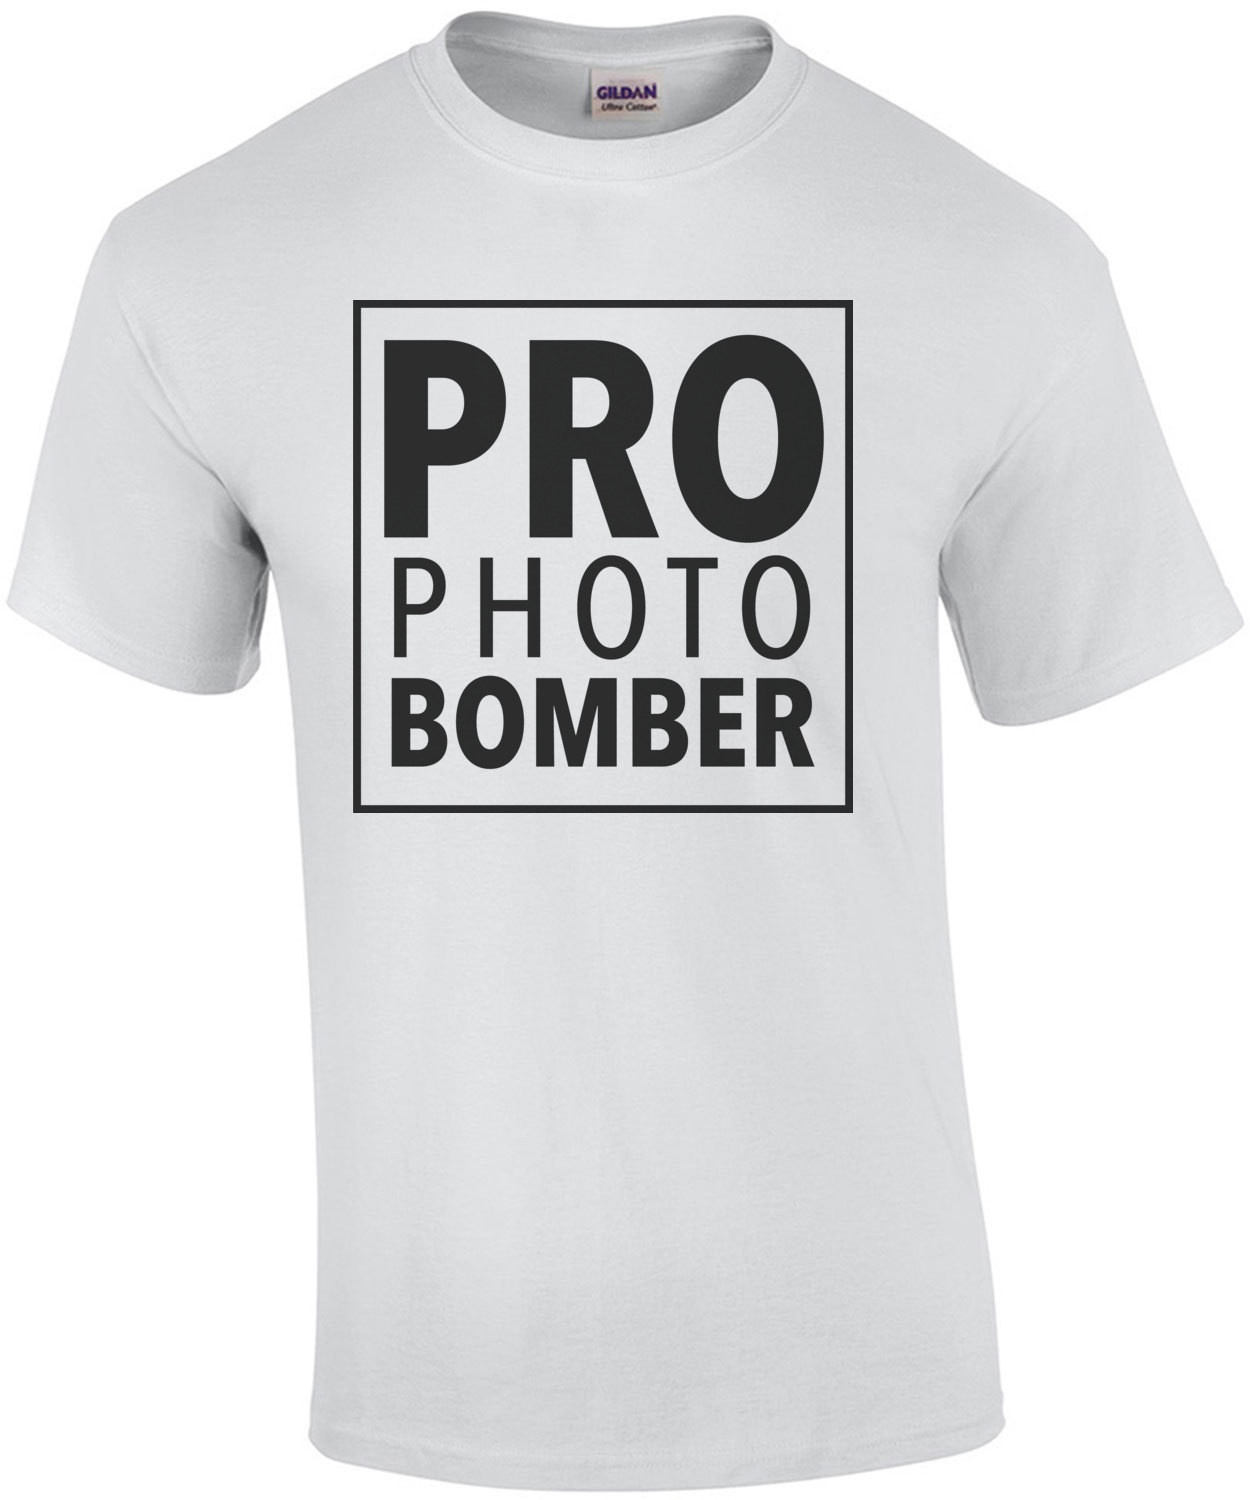 PRO Photo Bomber - Funny T-Shirt